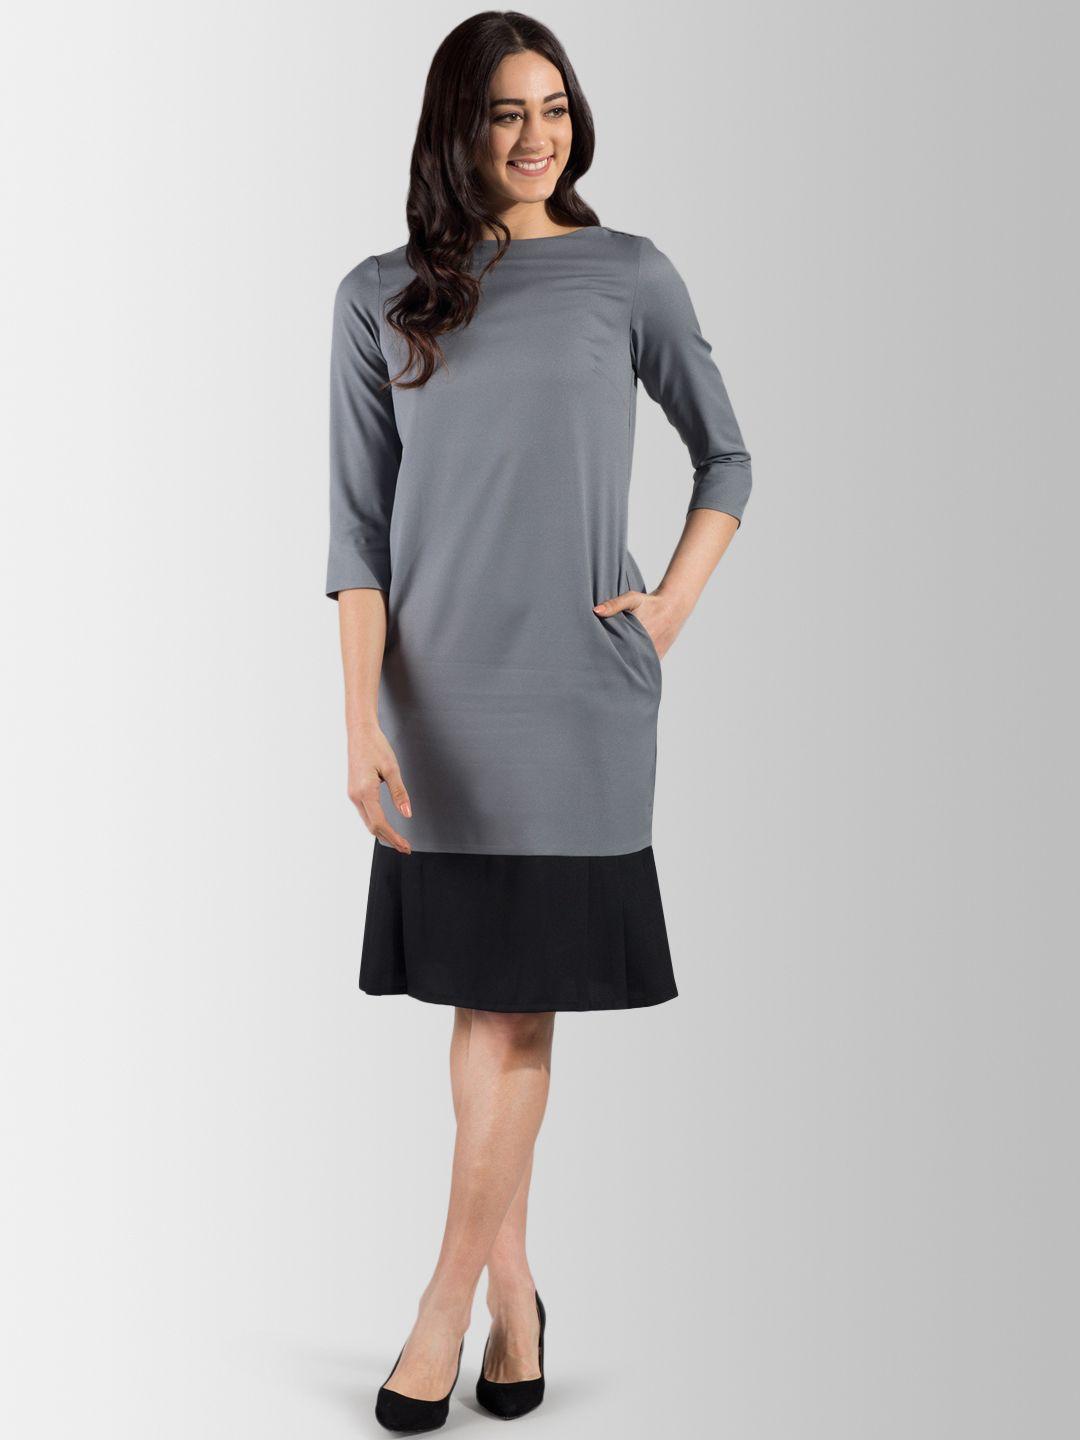 fablestreet women grey & black colourblocked drop-waist dress